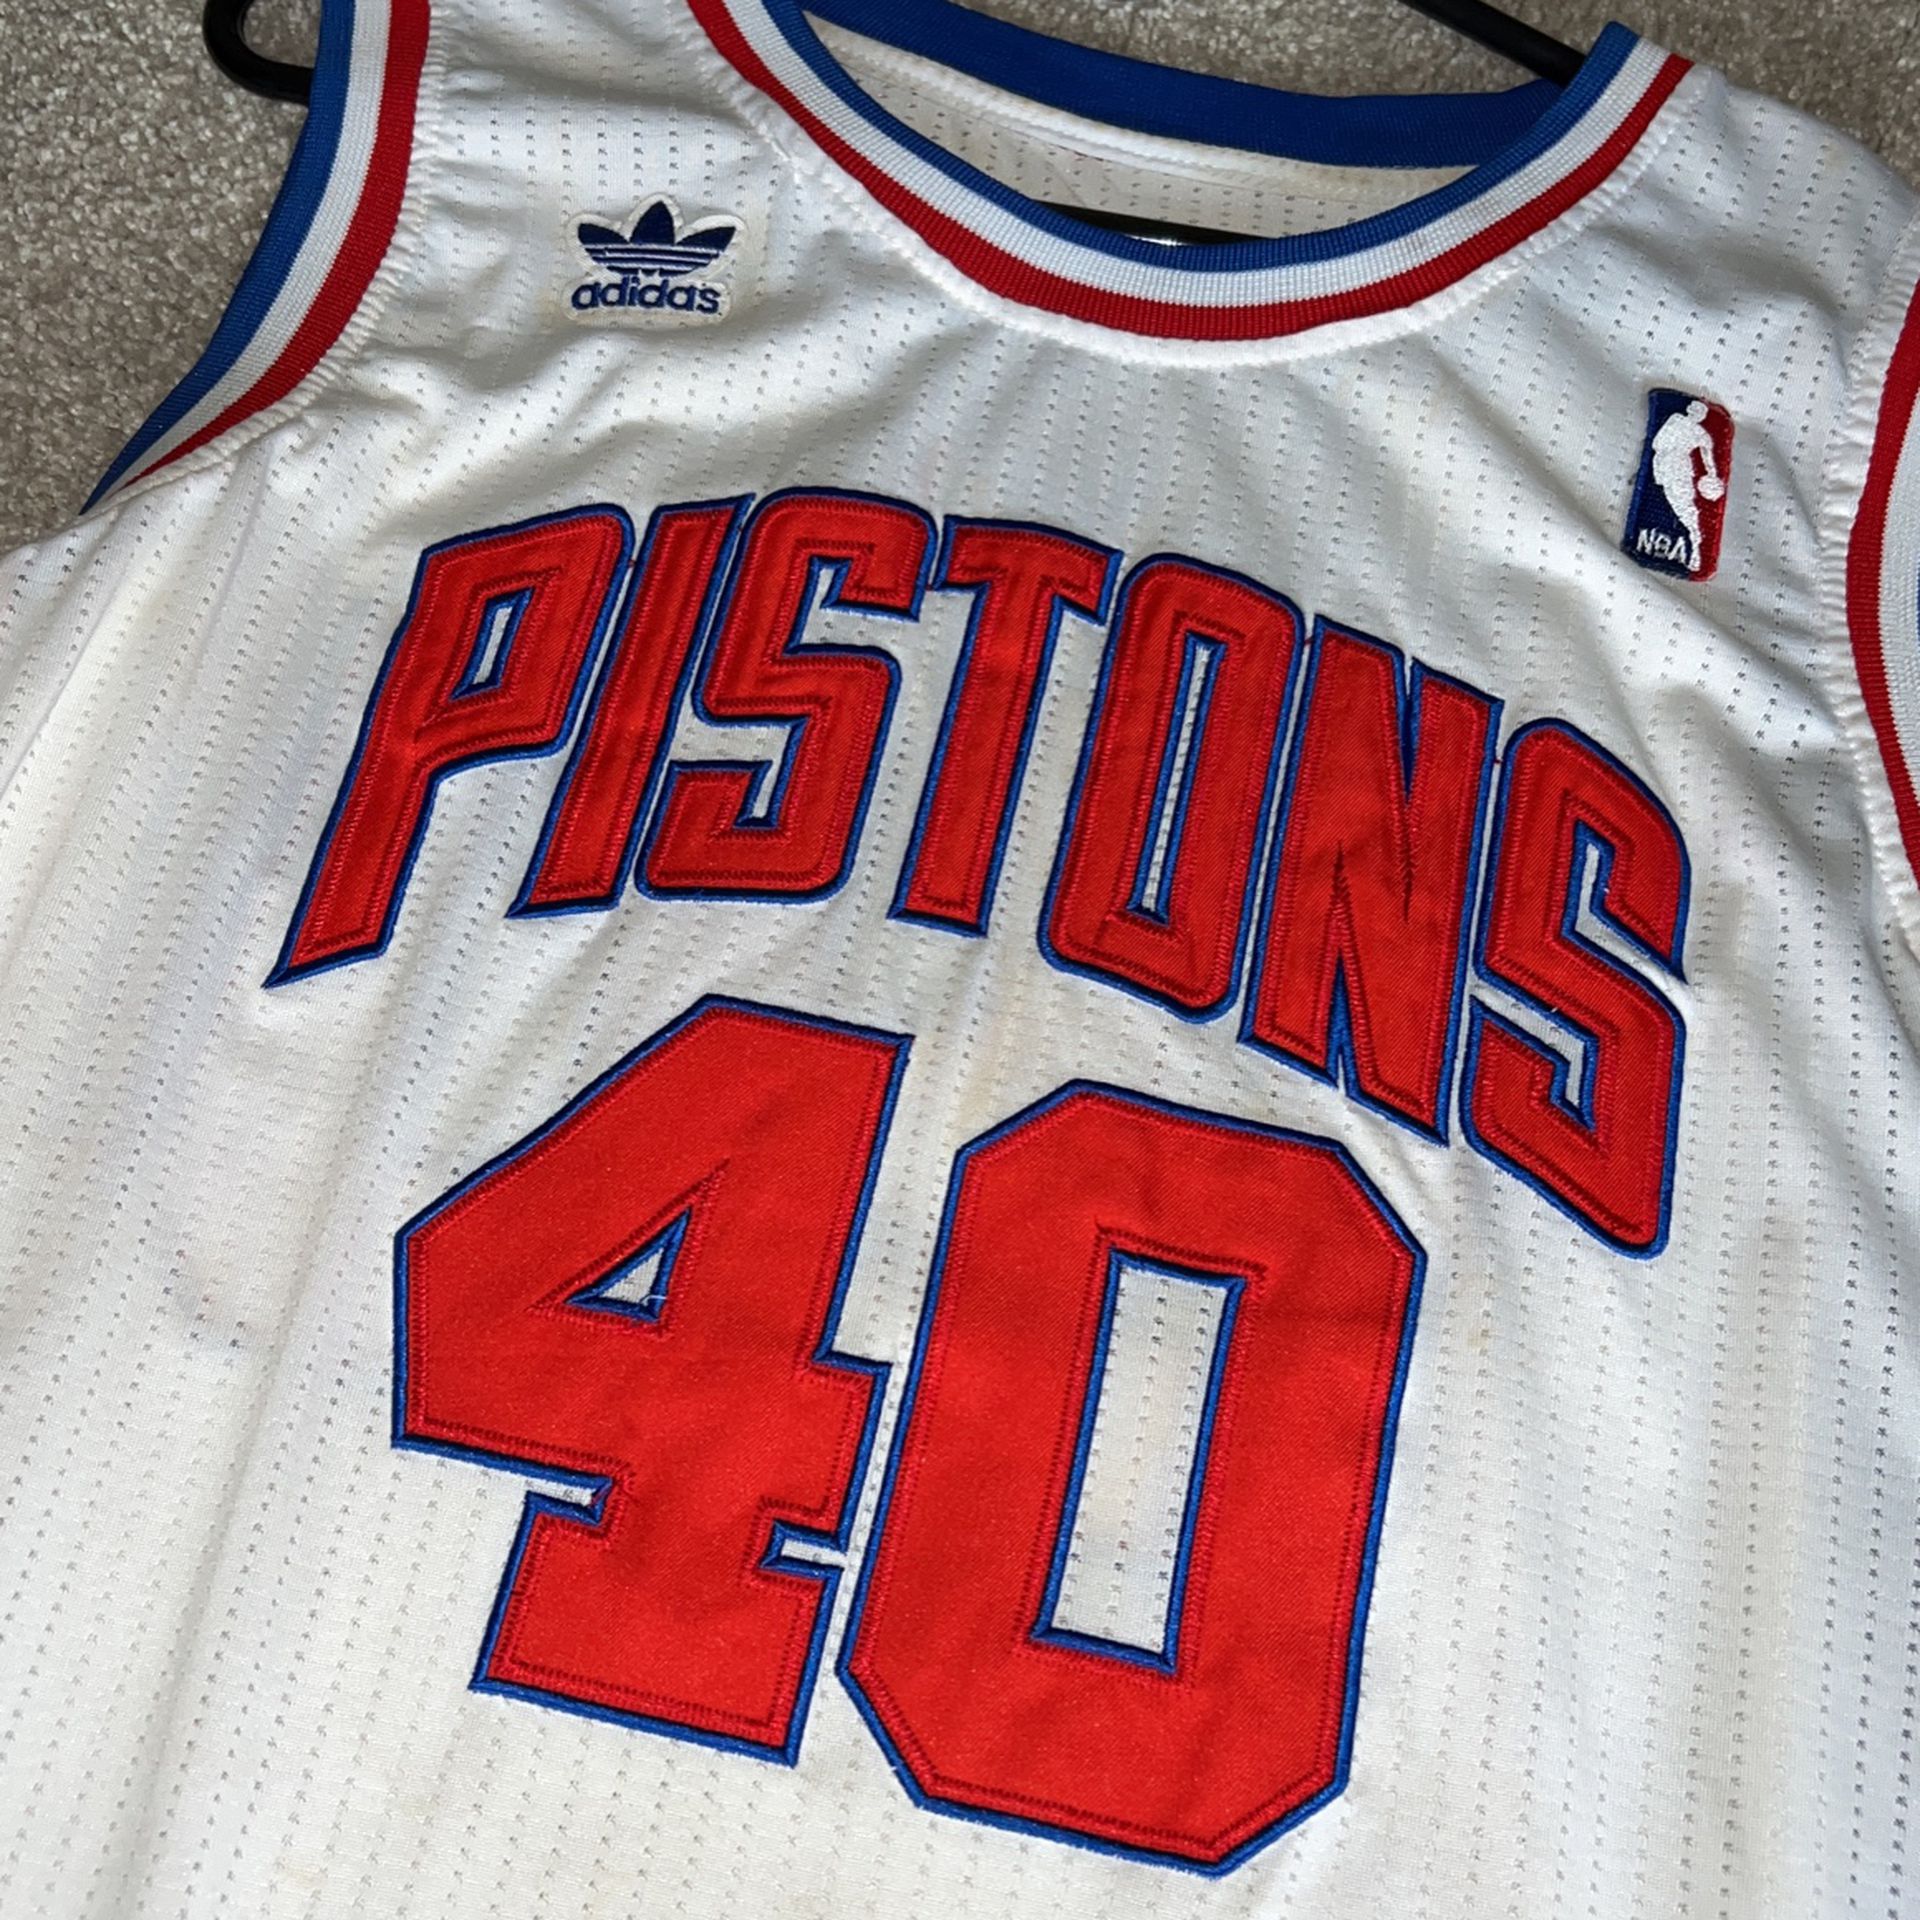 Bill Laimbeer Detroit Pistons Jersey for Sale in Dutton, MI - OfferUp